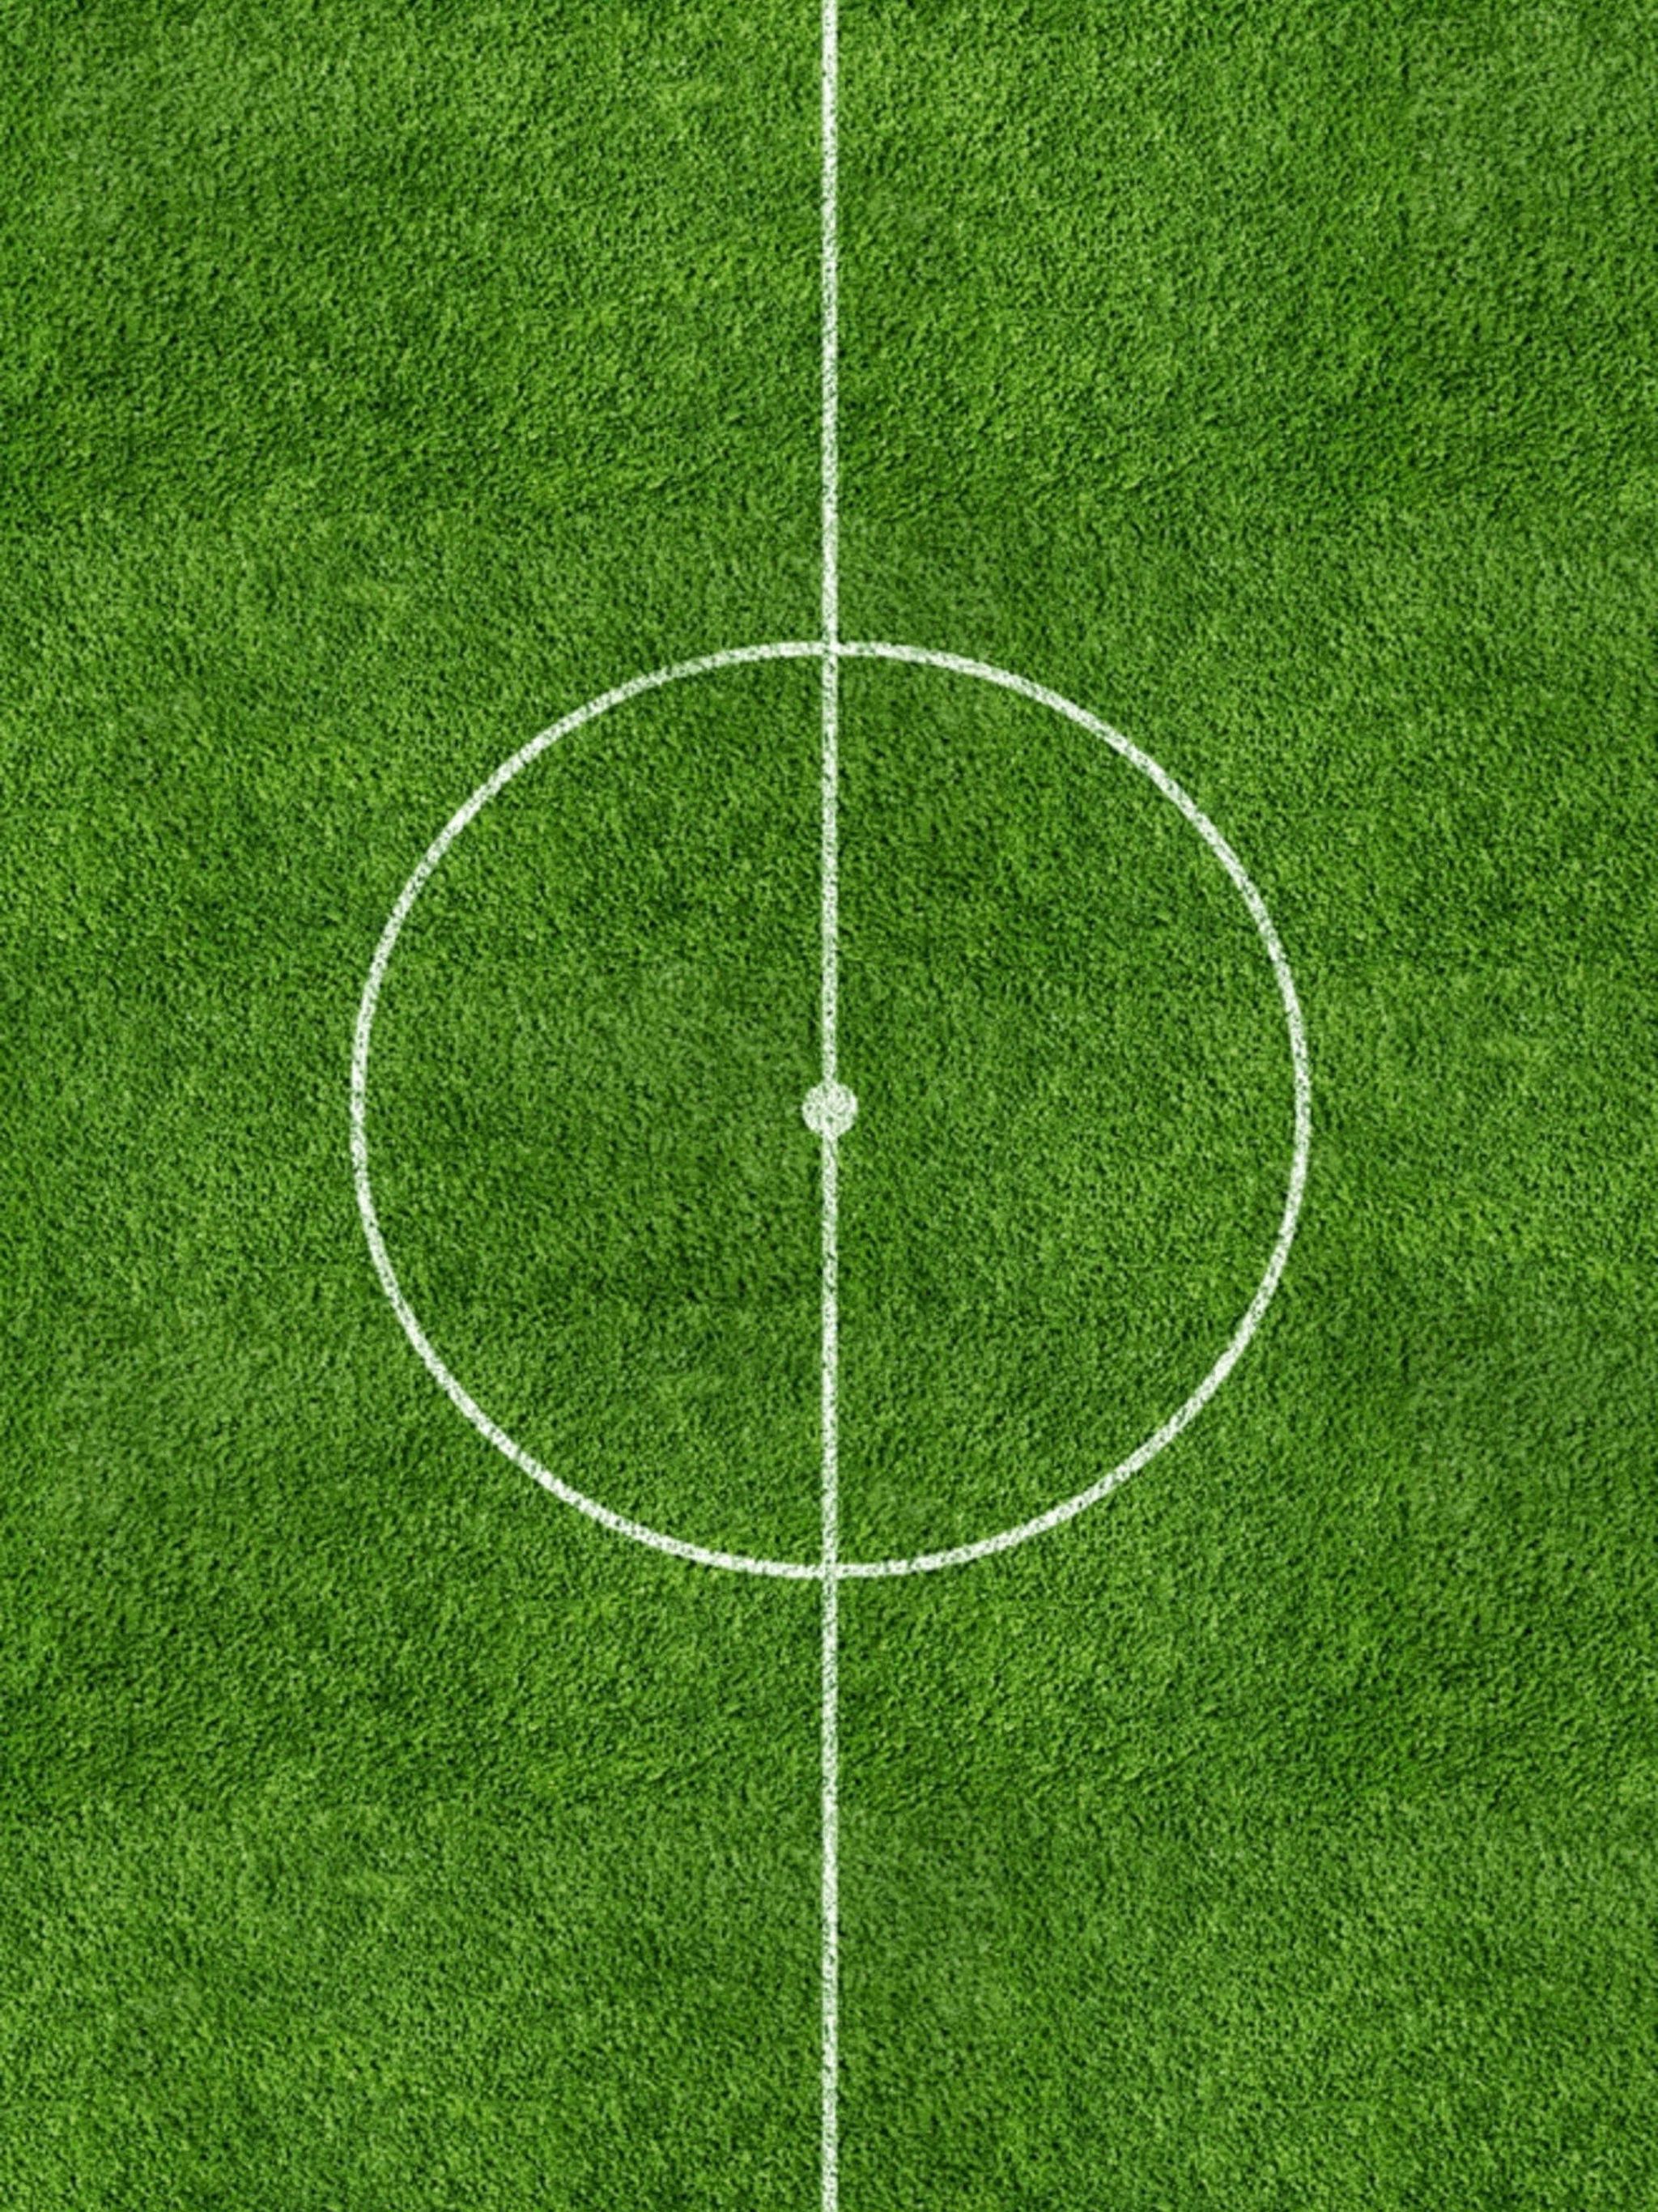 Football Ground iPad Wallpaper. Duvar kağıtları, Dokular, Duvar